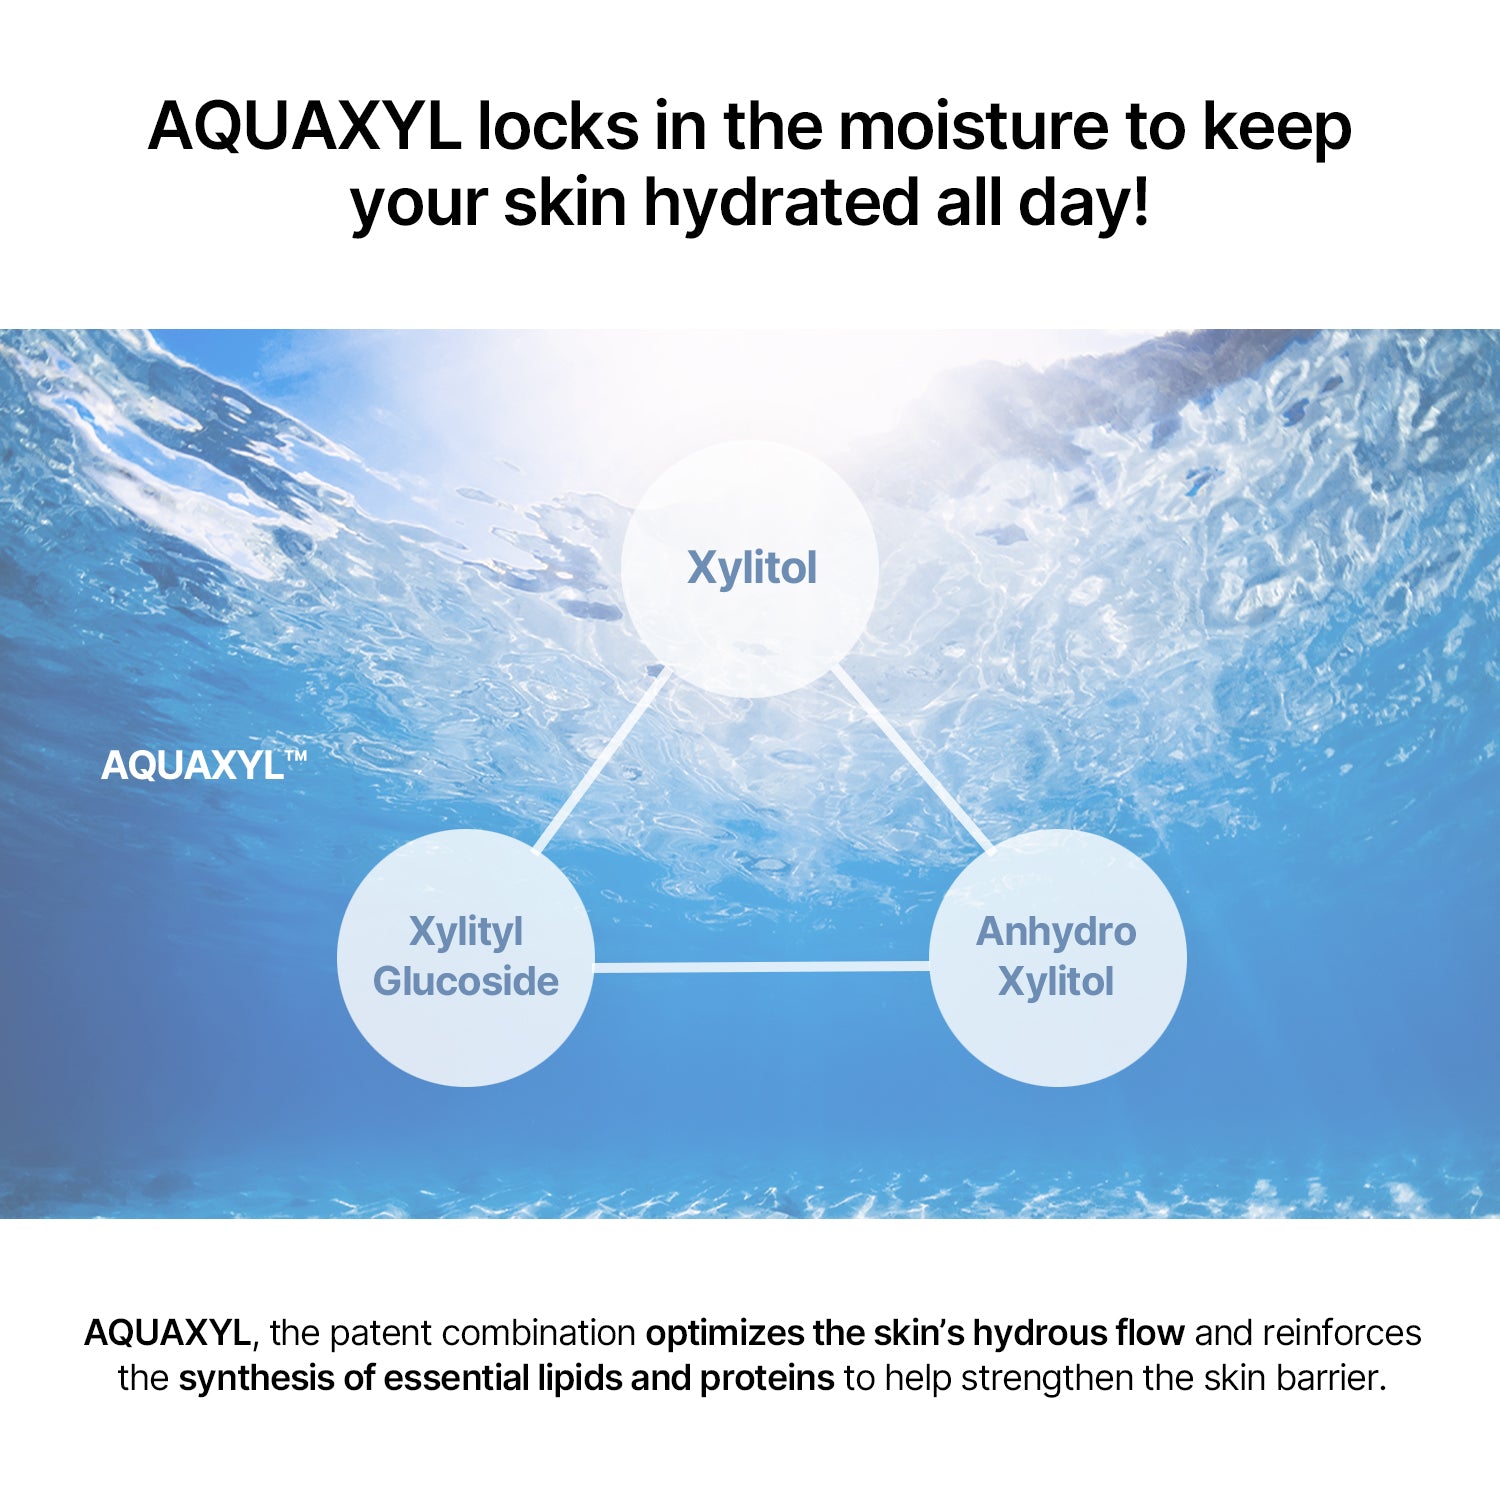 The Real Sedum Aqua Boosting Essence (150ml)